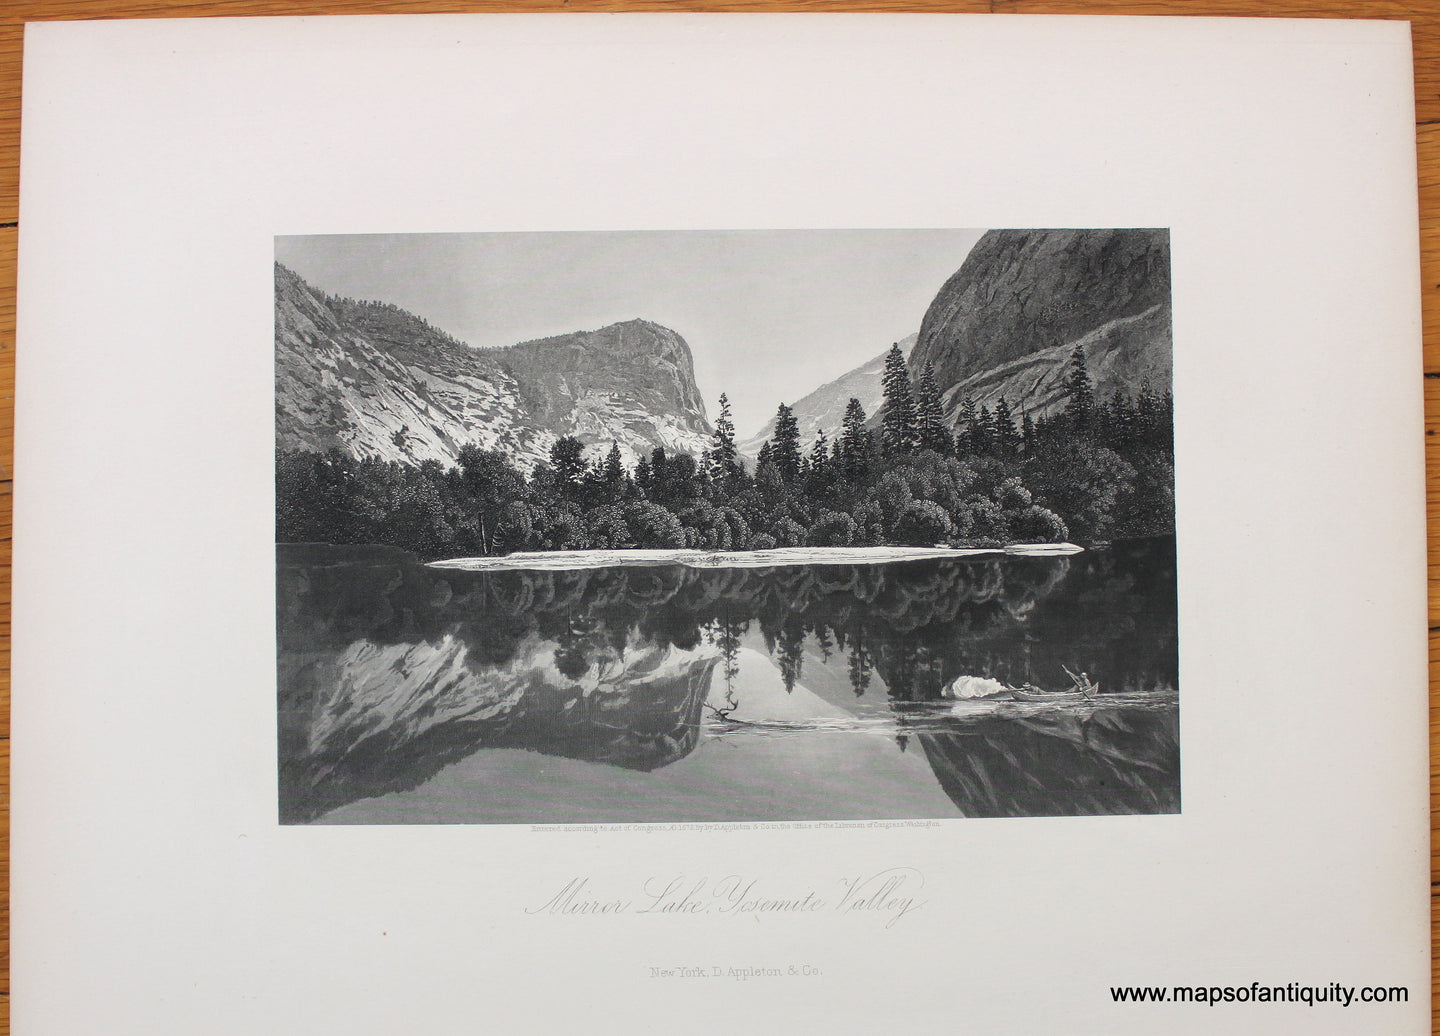 Antique-Print-Prints-Mirror-Lake-Yosemite-Valley-California-1872-Appleton-Picturesque-America-1800s-19th-century-maps-of-Antiquity